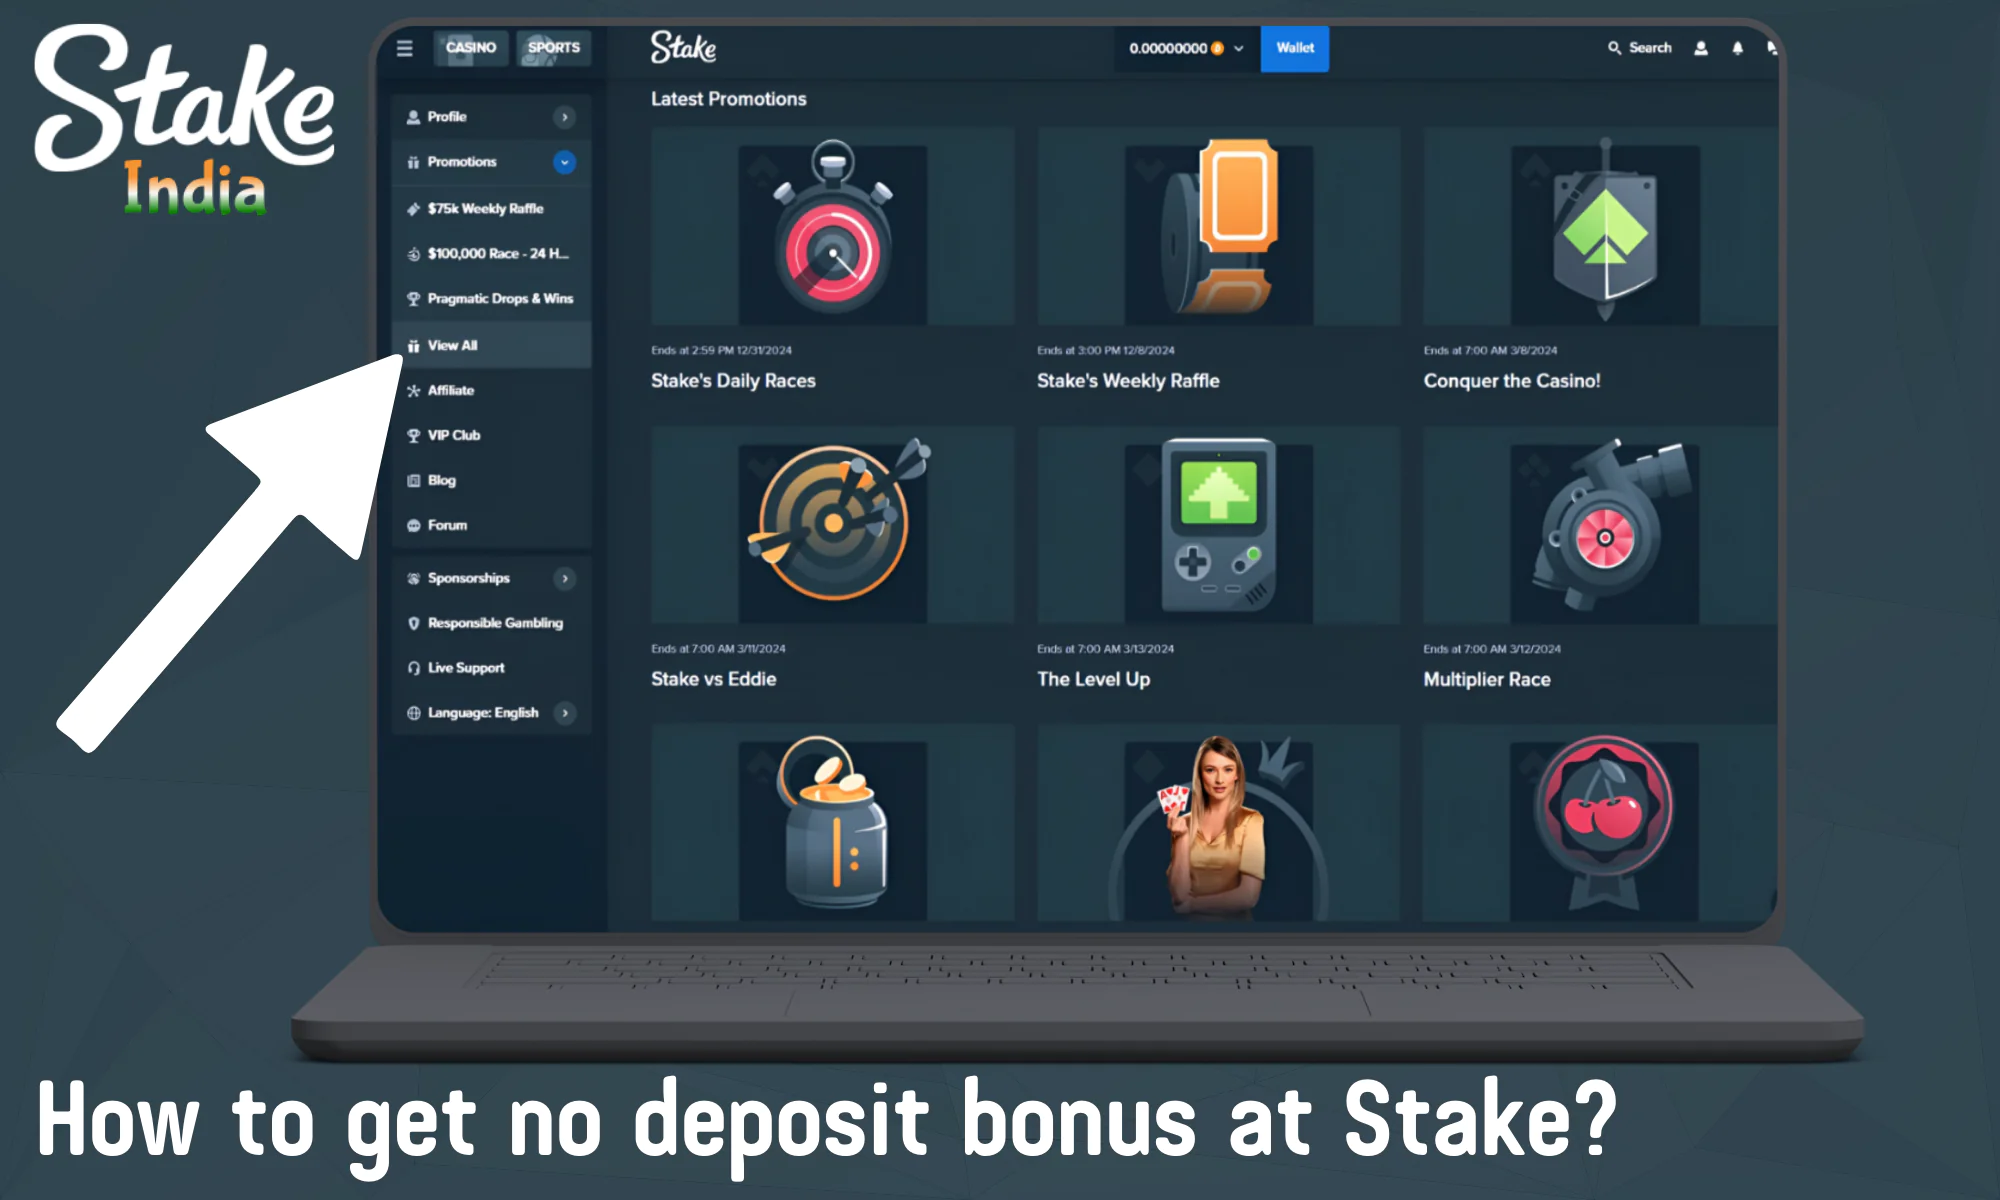 A few simple steps to get no deposit bonuses at Stake